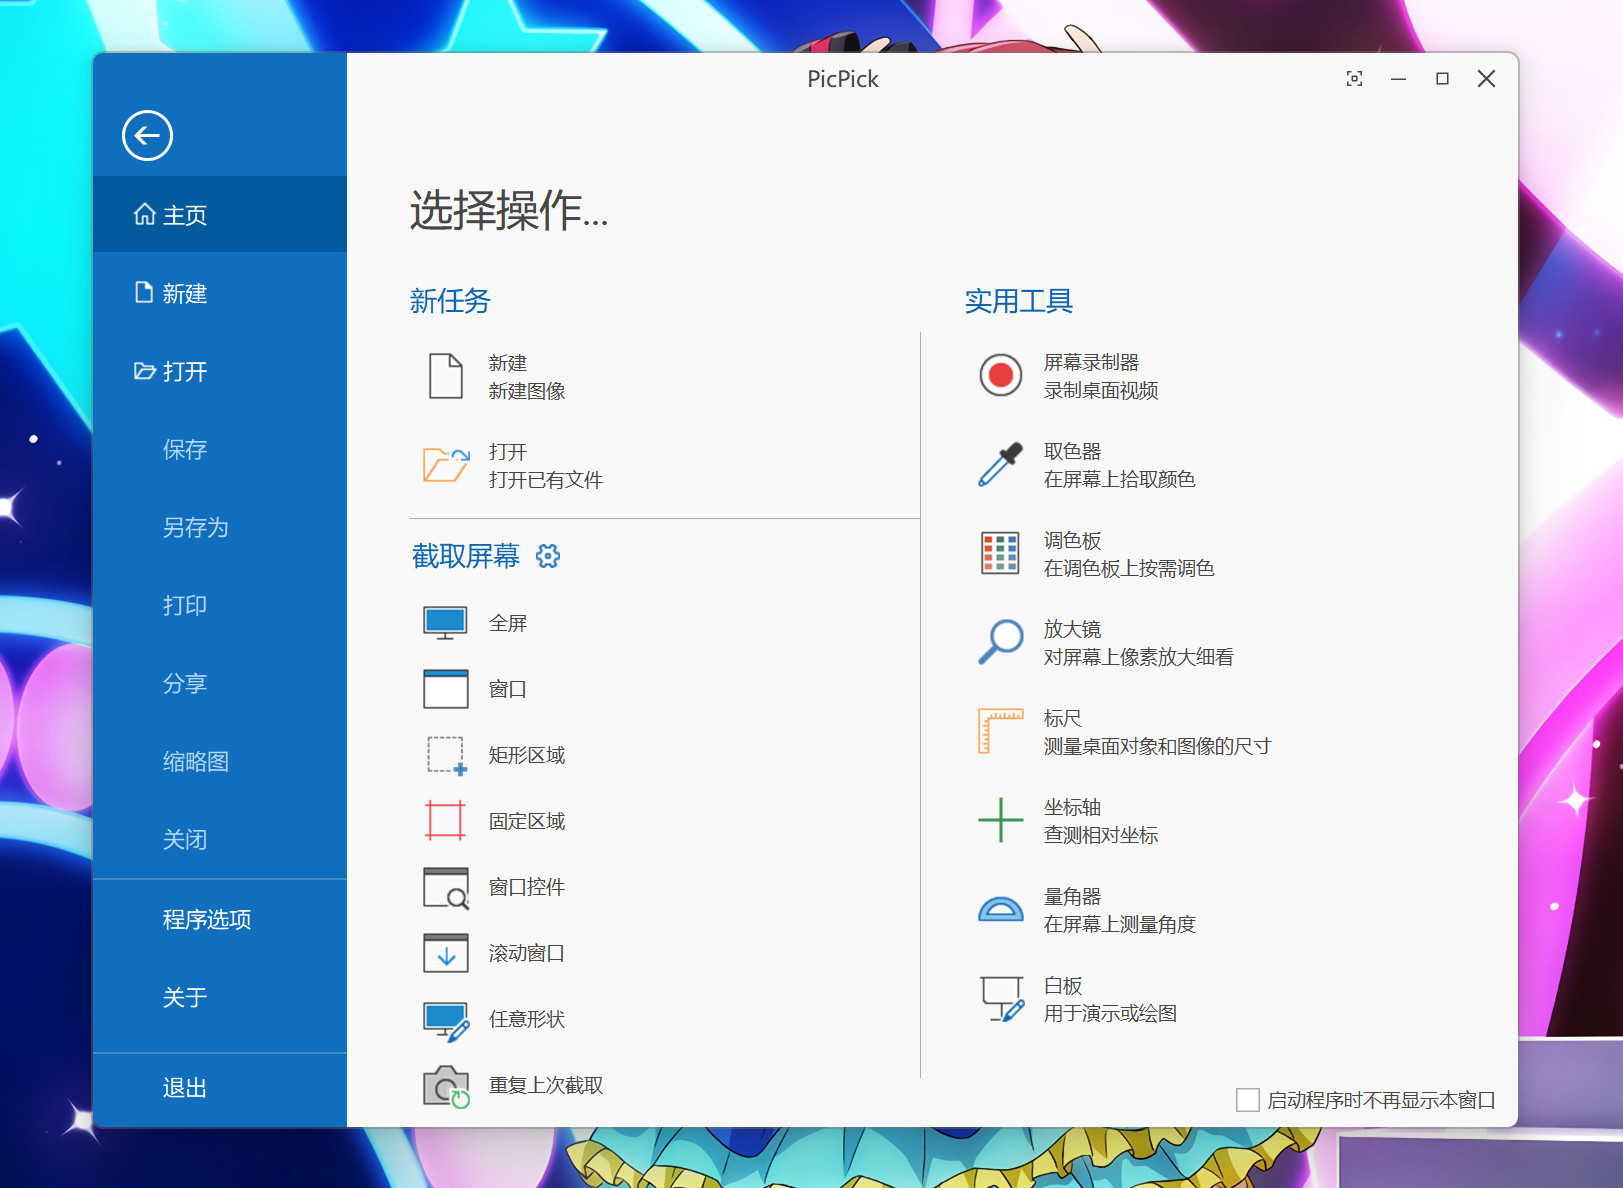 PicPick Professional (截图工具)v7.2.0中文免安装激活版下载